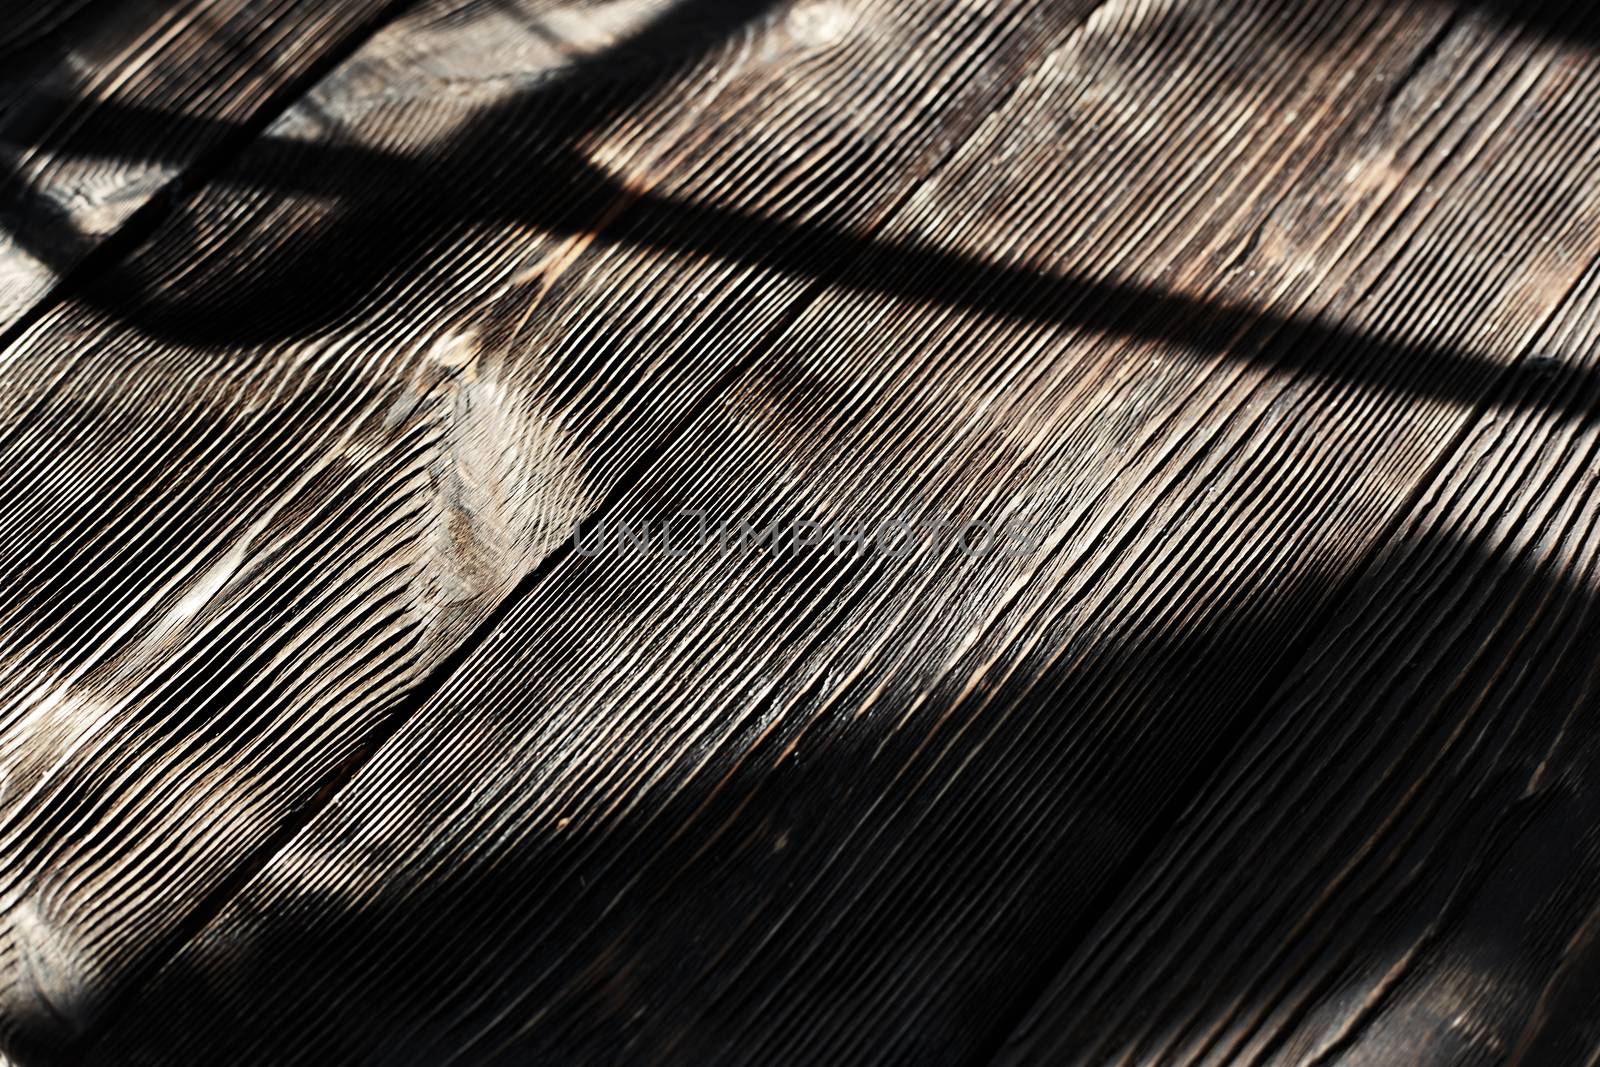 Hardwood floor with shadows by Novic